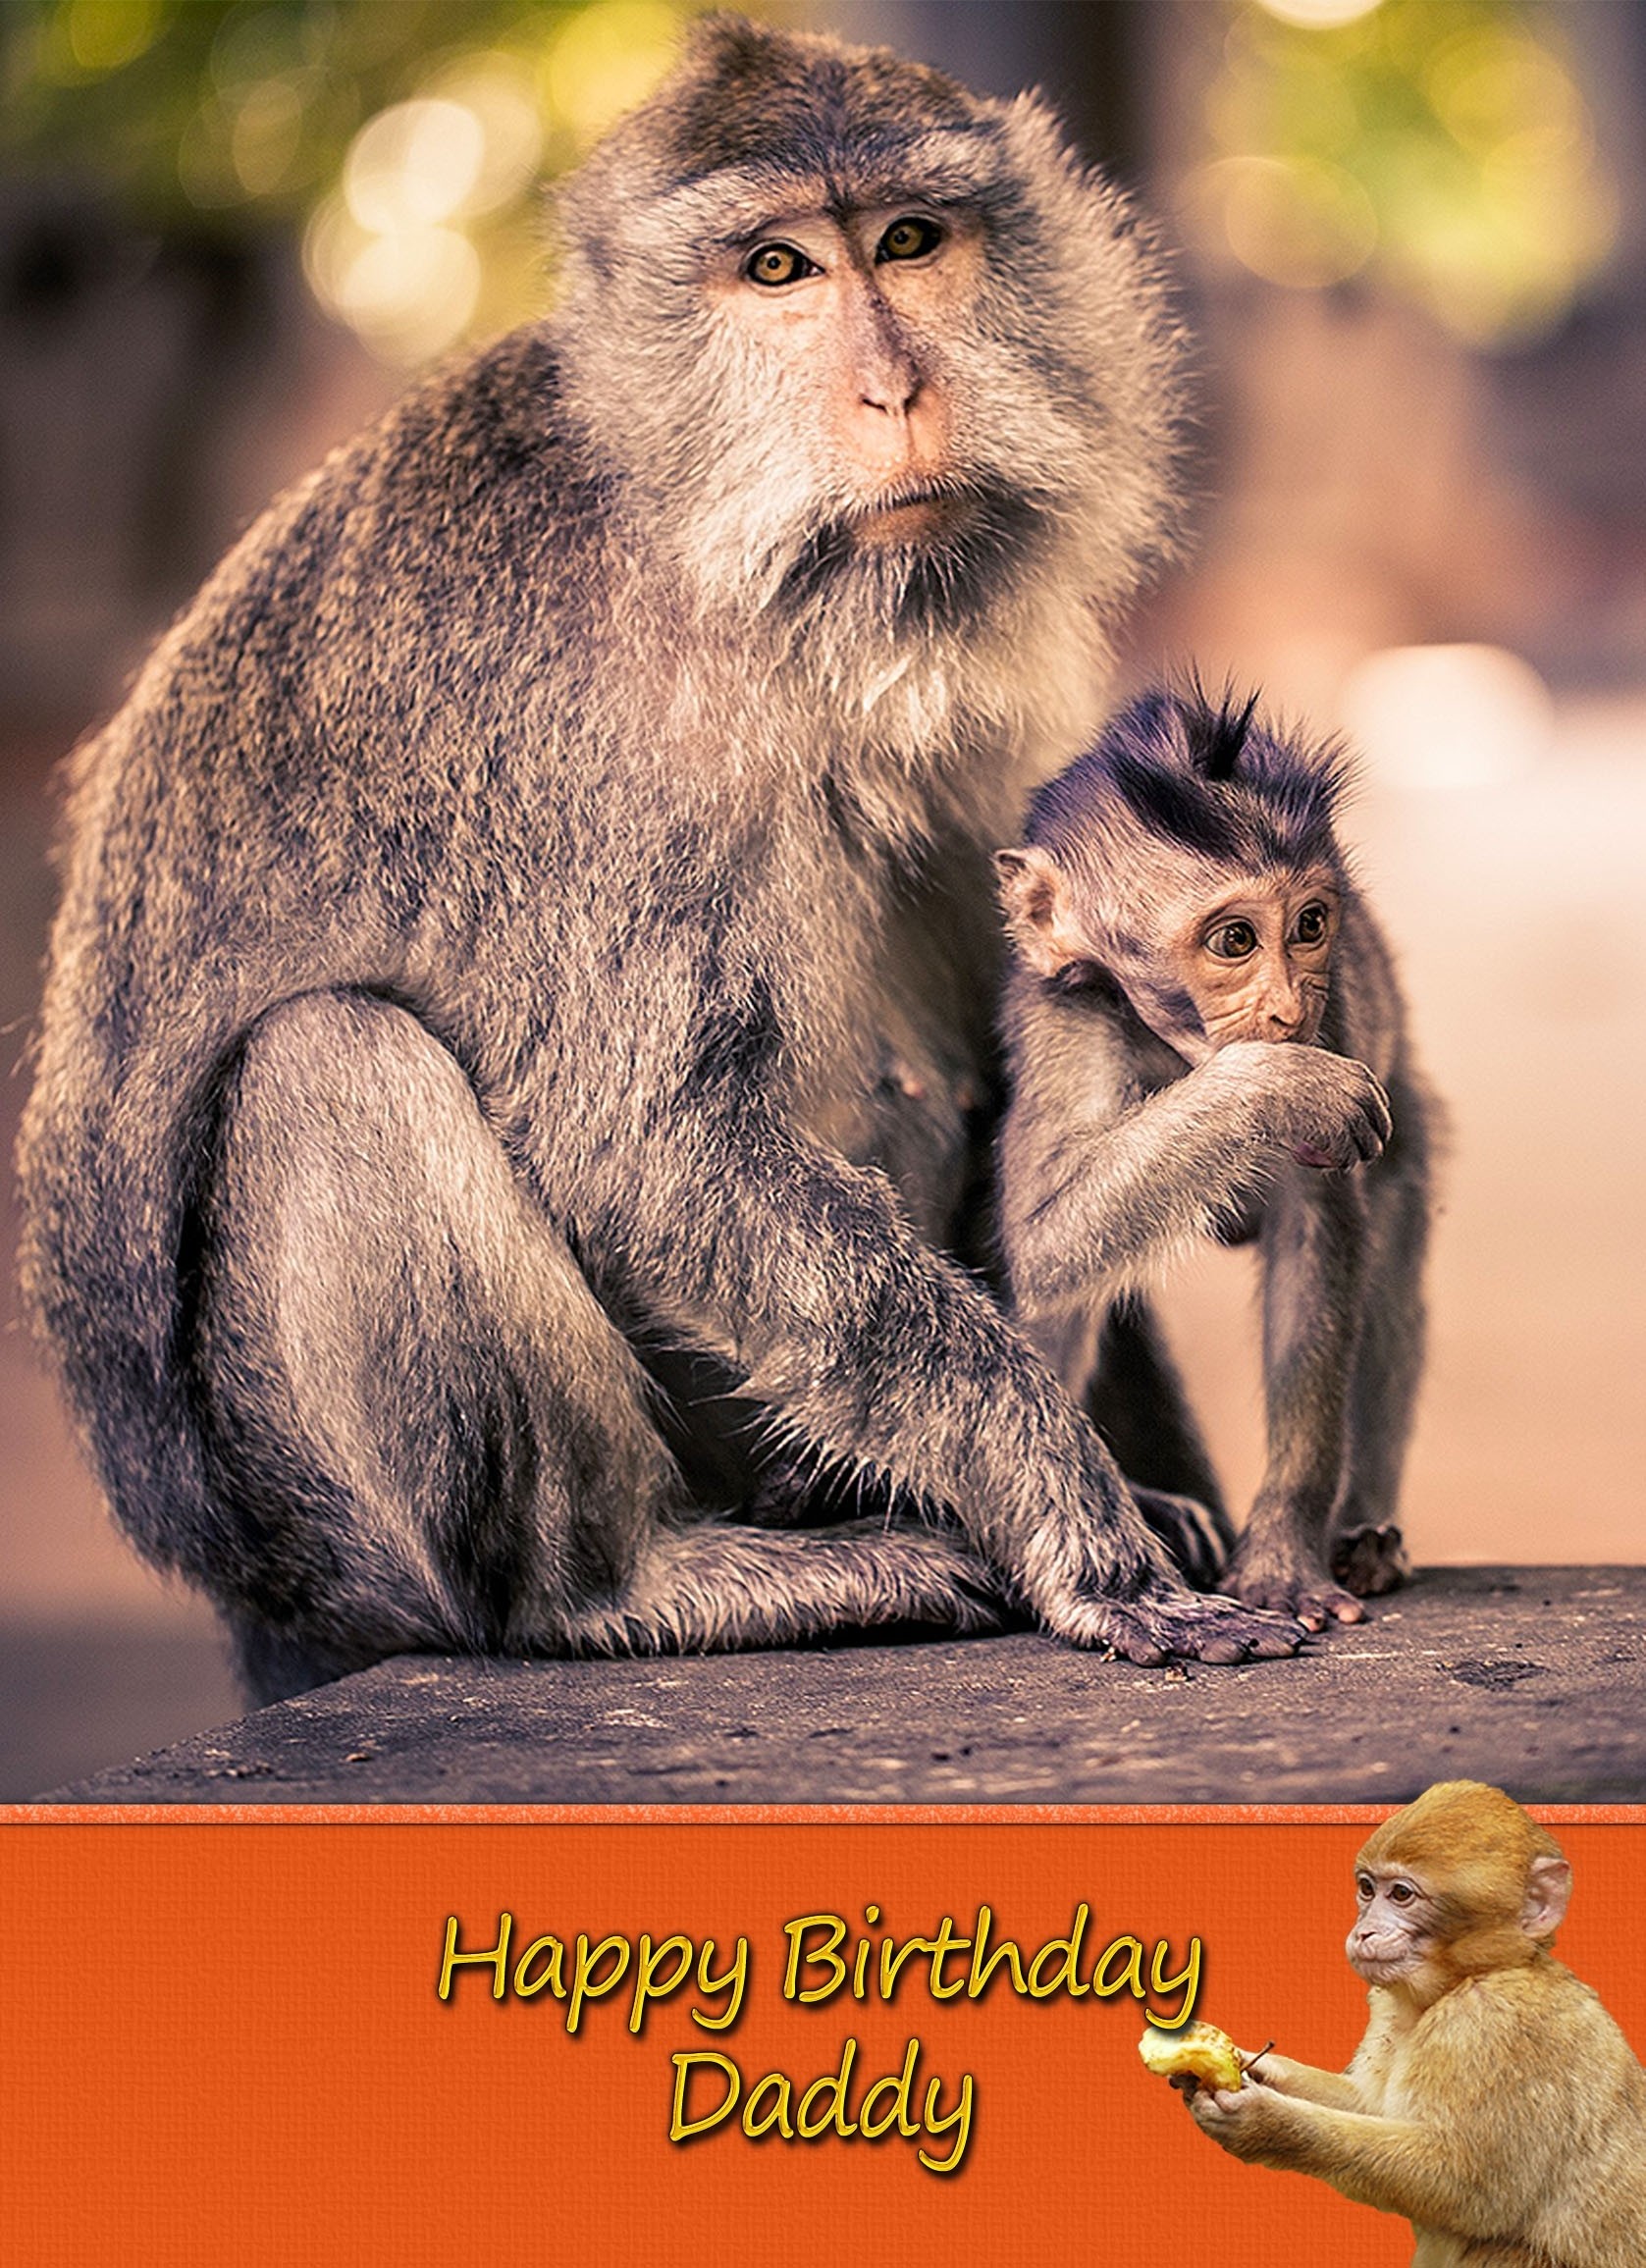 Personalised Monkey Card